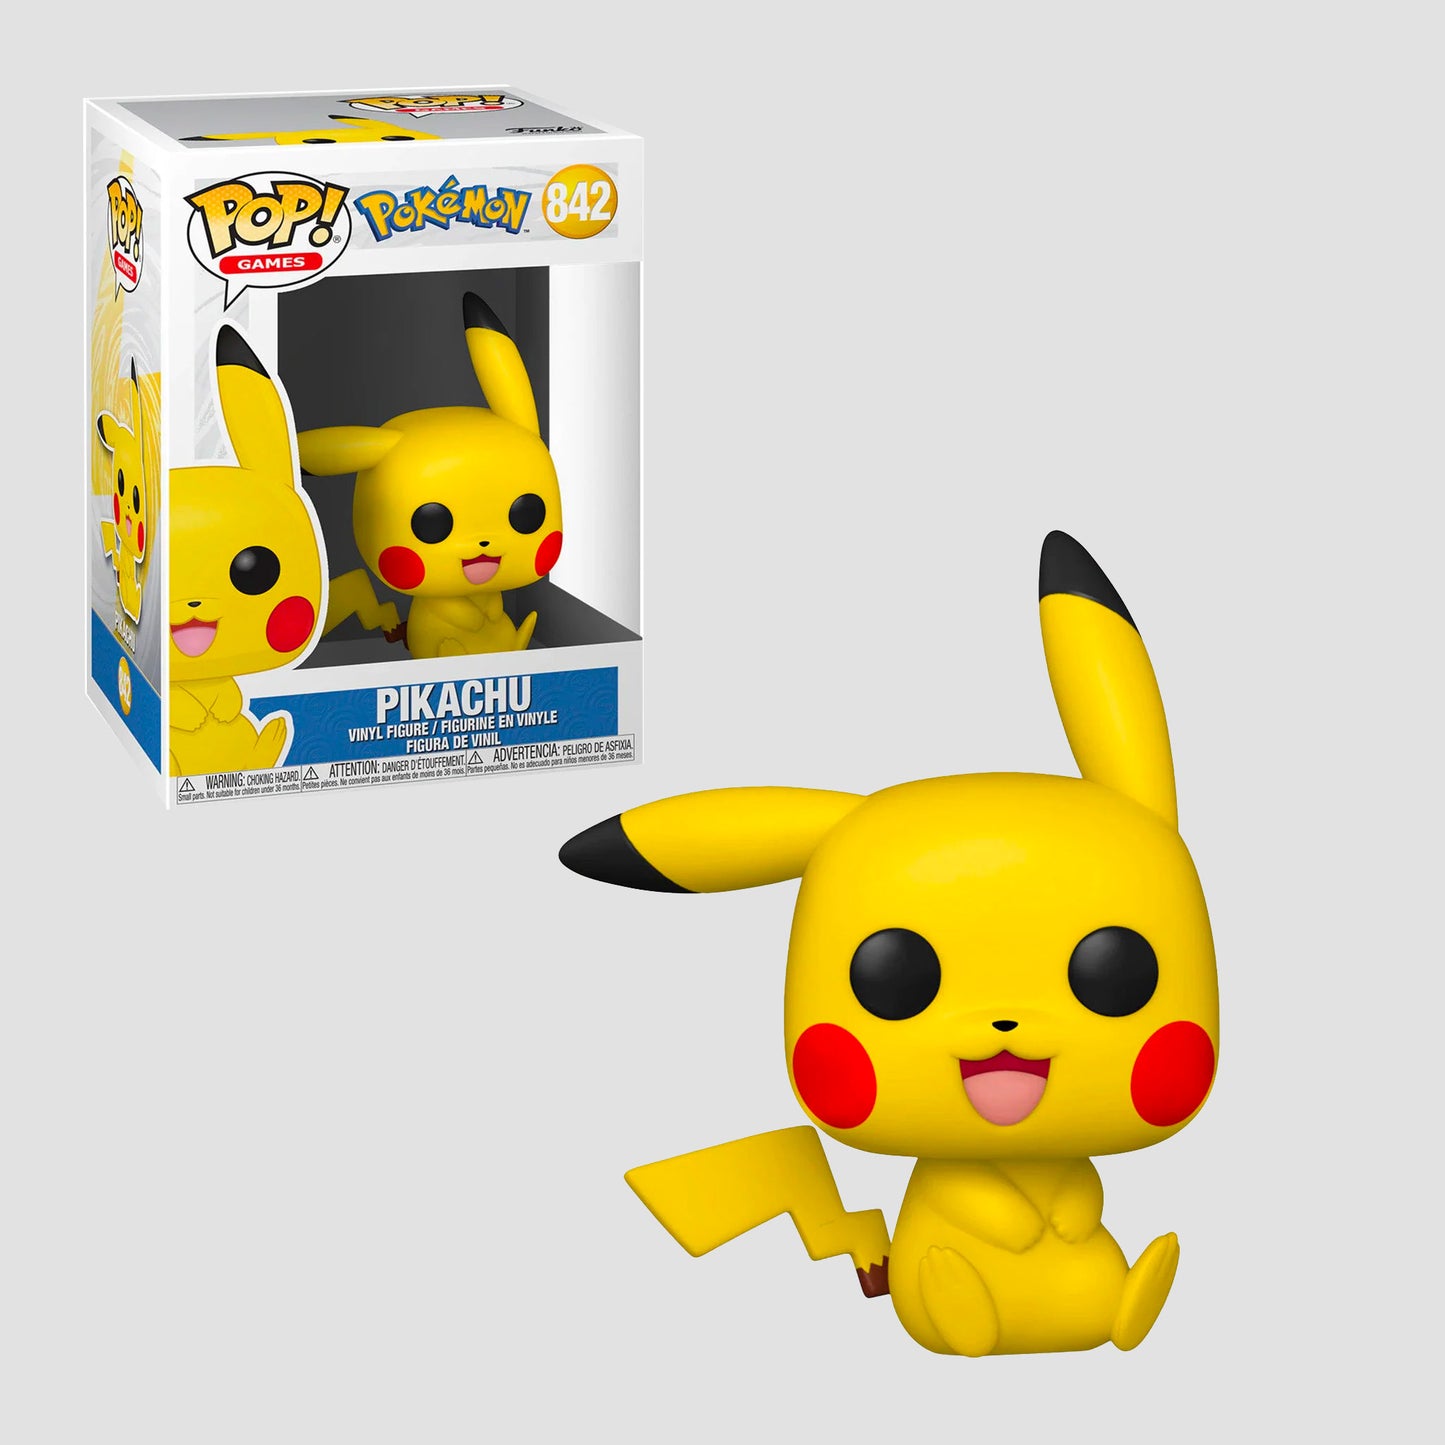 Pikachu (Sitting) Pokemon Funko Pop!